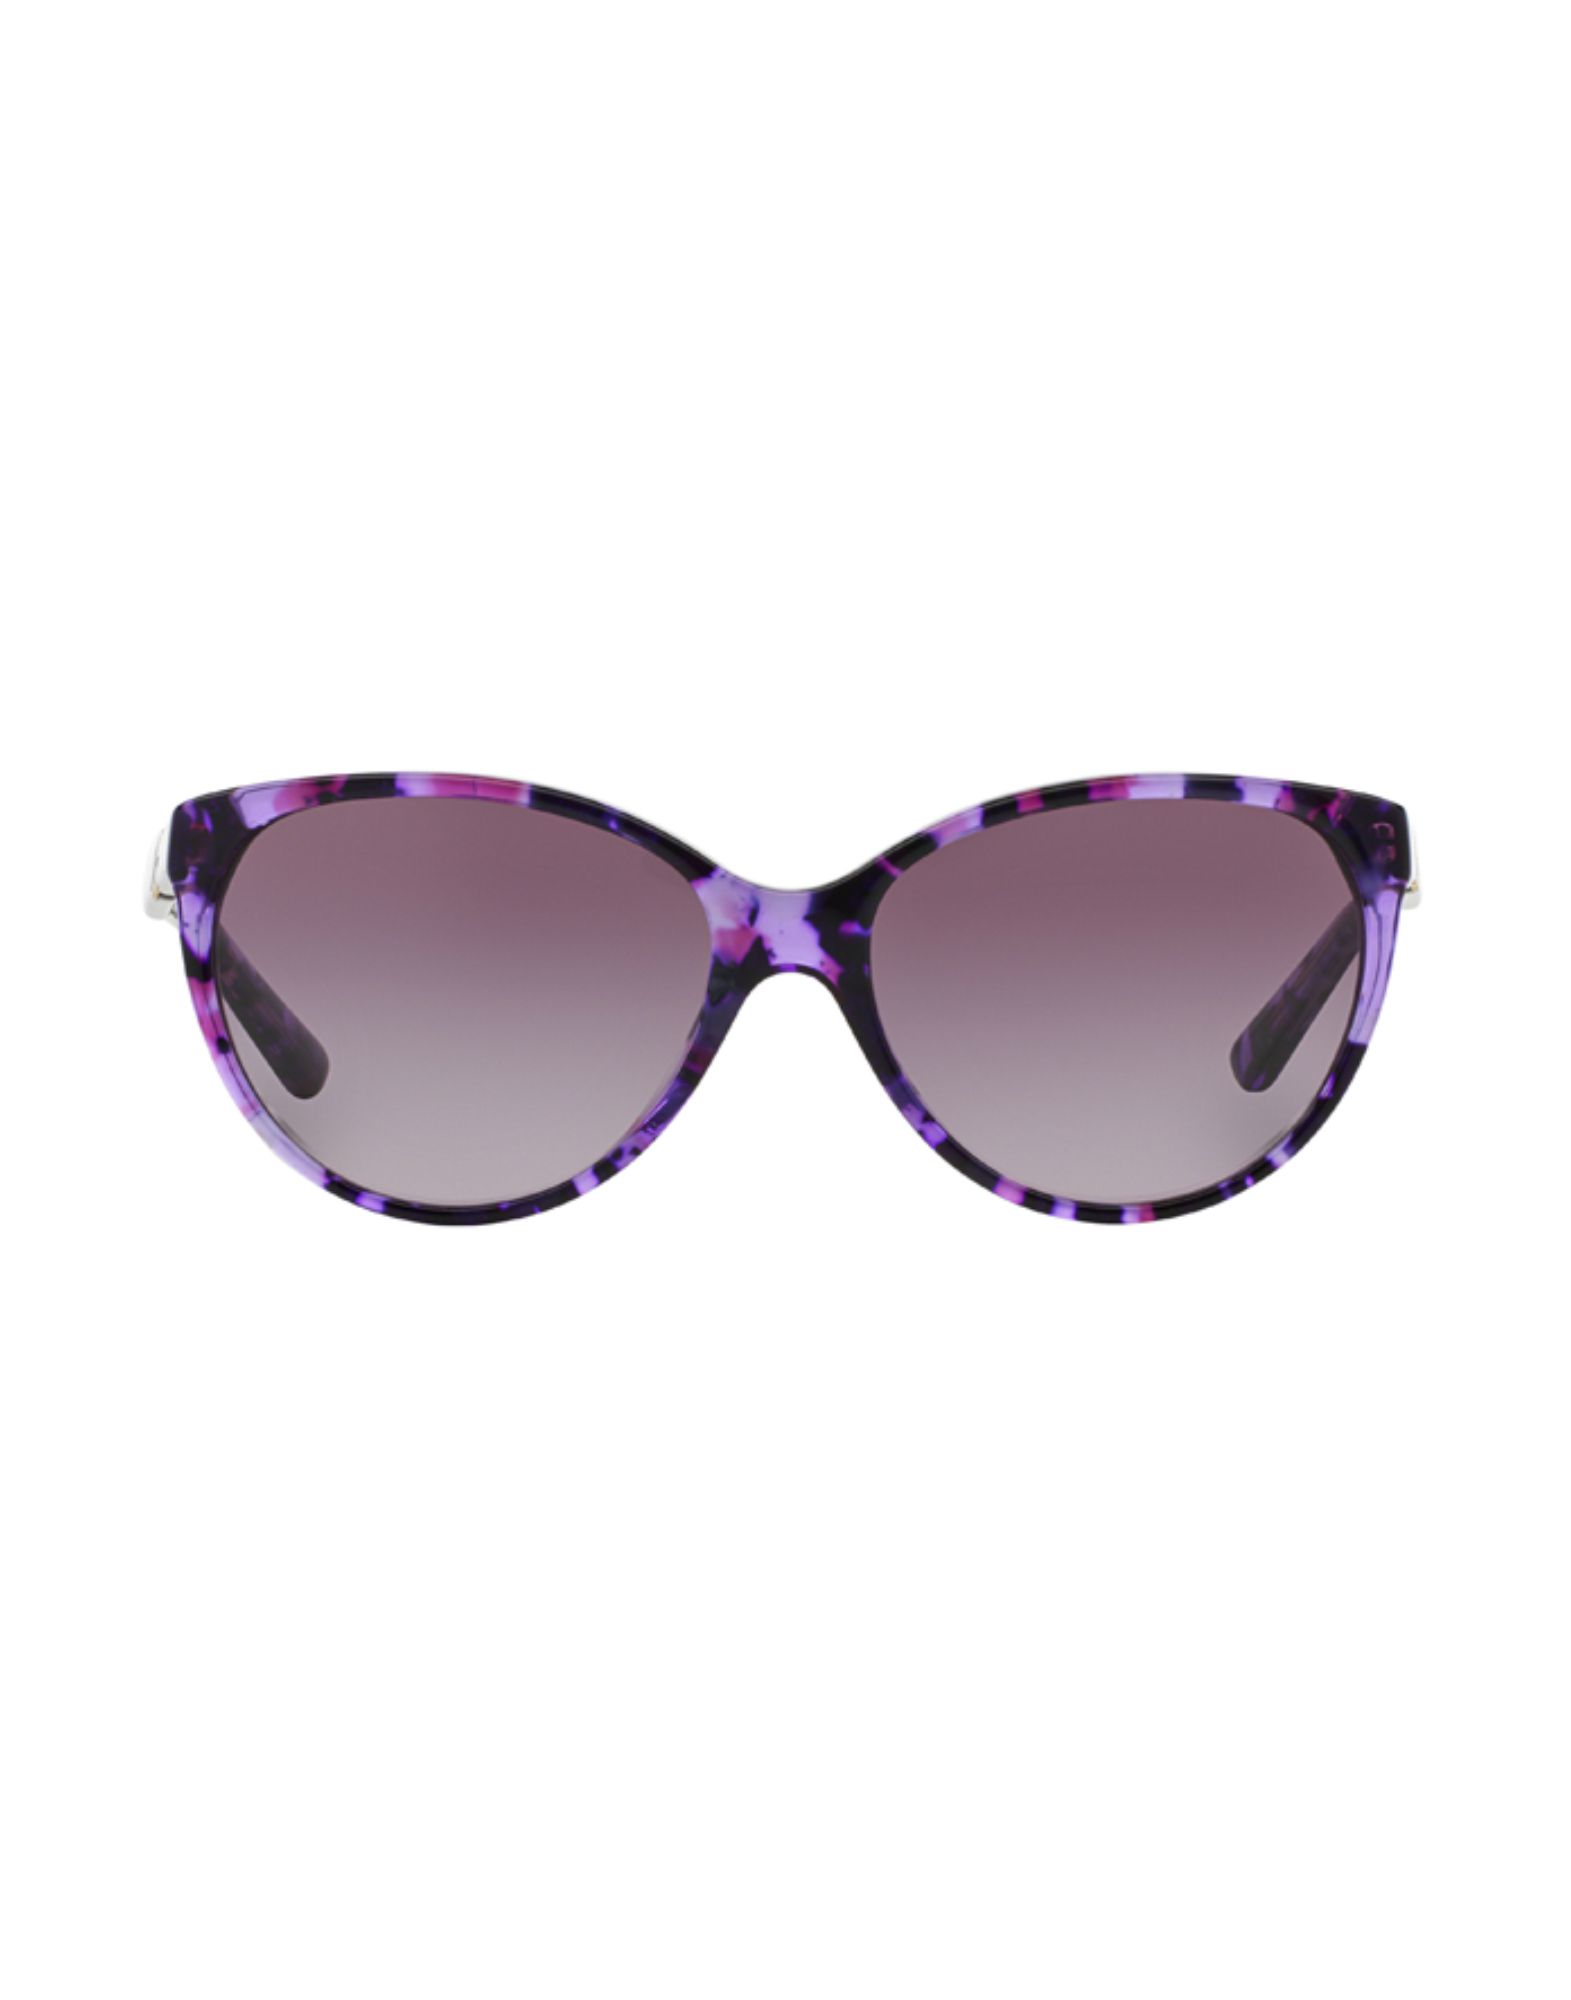 Dolce & gabbana Sunglasses in Purple | Lyst